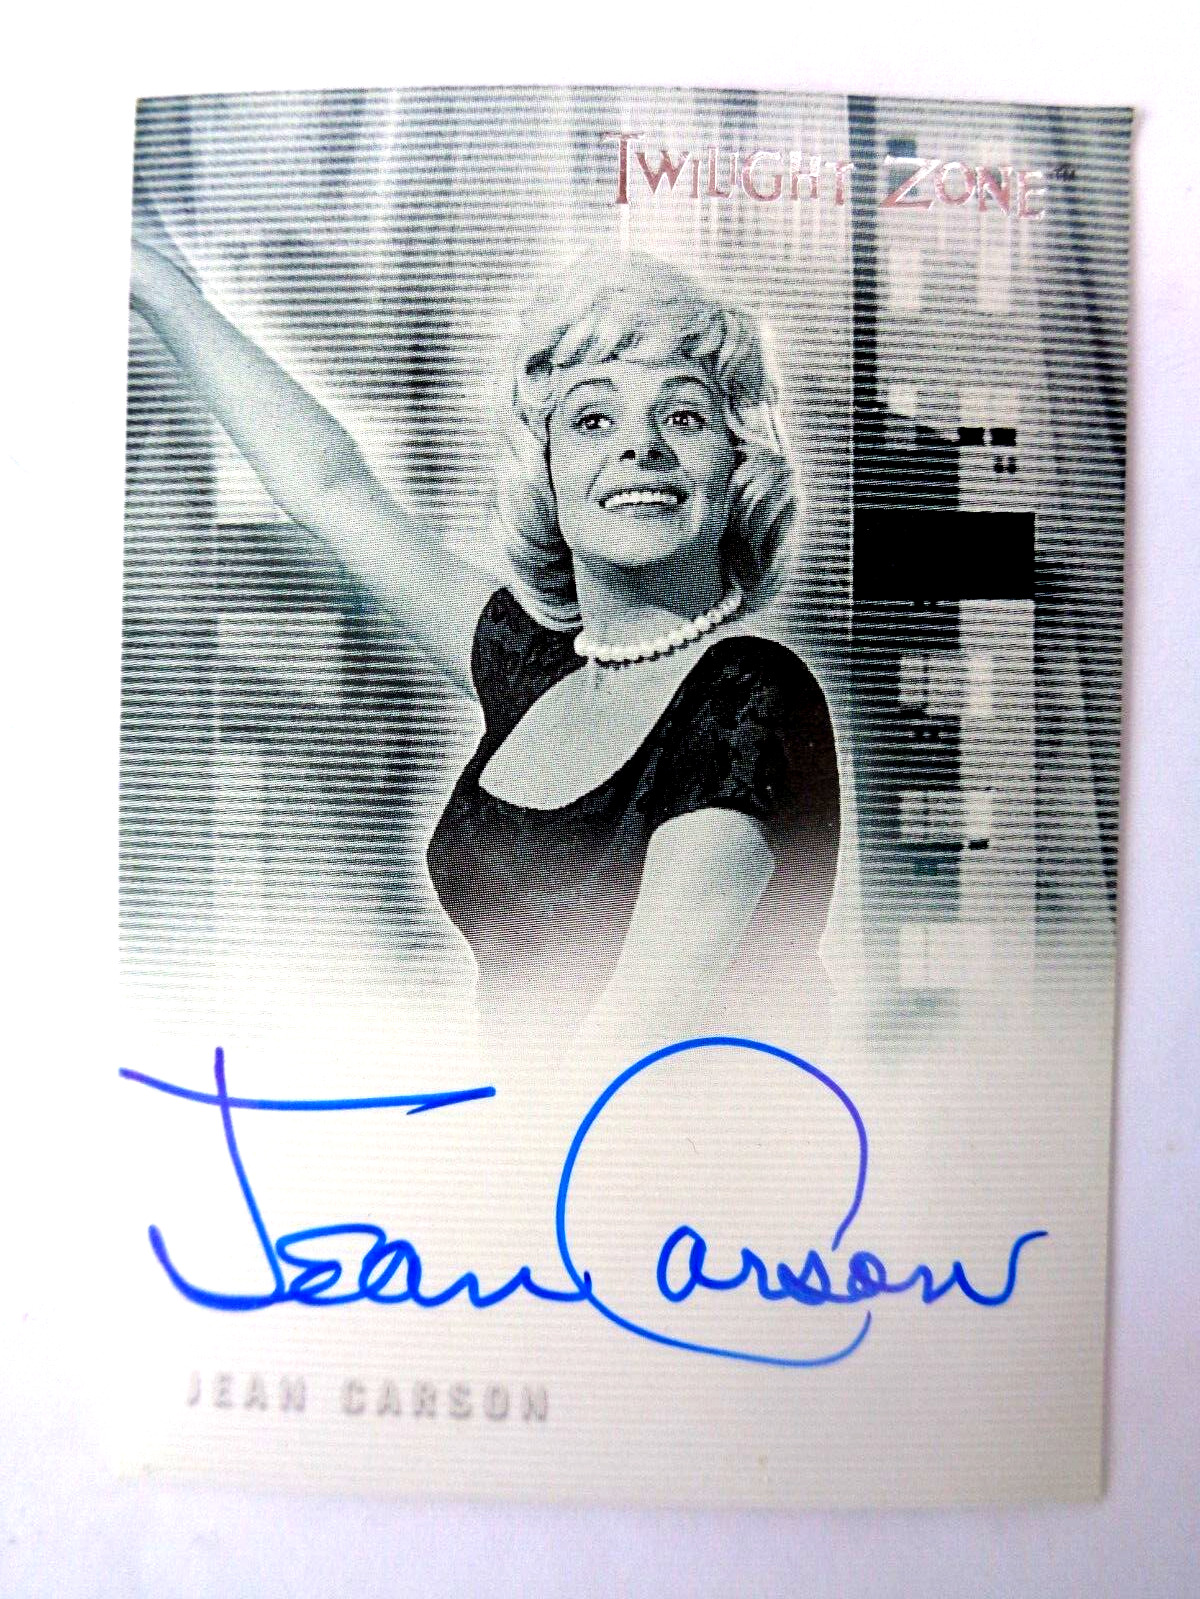 The Twilight Zone Jean Carson - Paula Deidrich Rittenhouse Autograph Card Signed